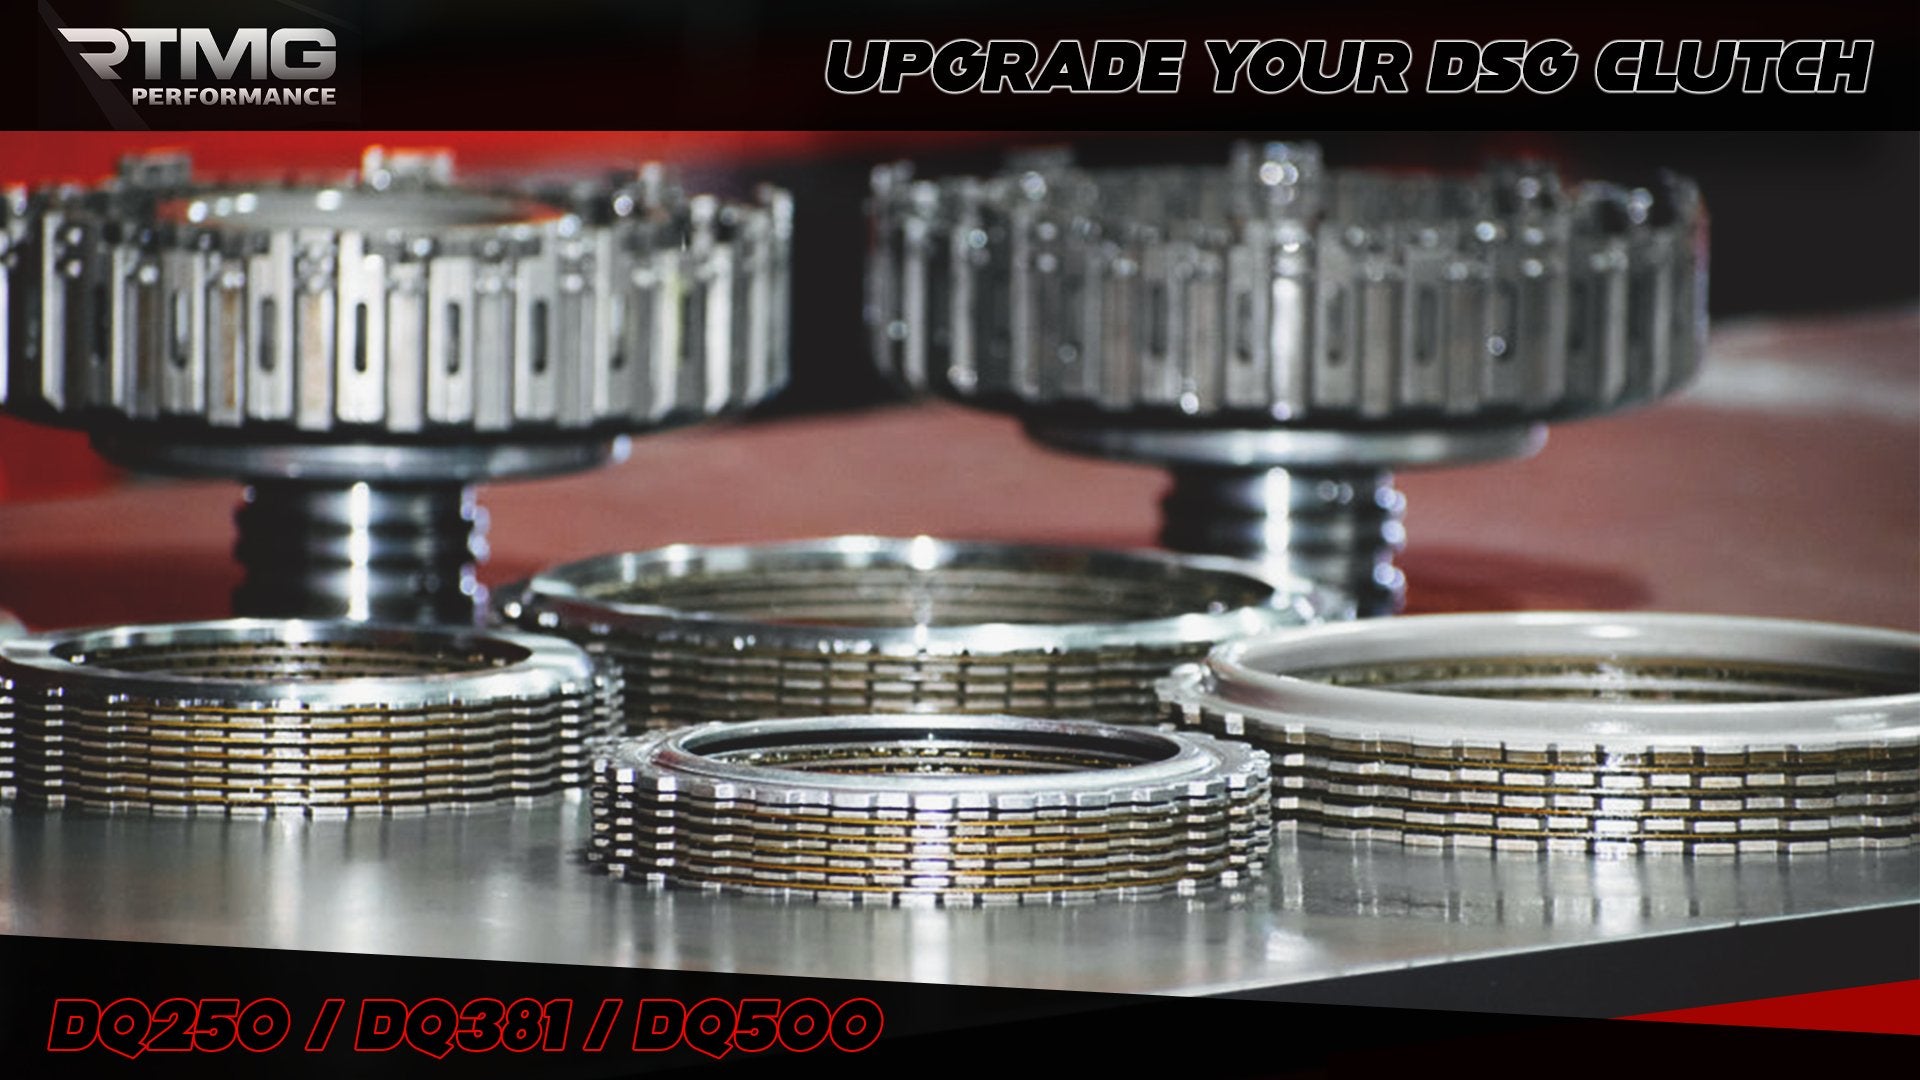 Upgrade your DSG Clutch Service - DSG DQ250 / DQ381 / DQ500 - RTMG Performance